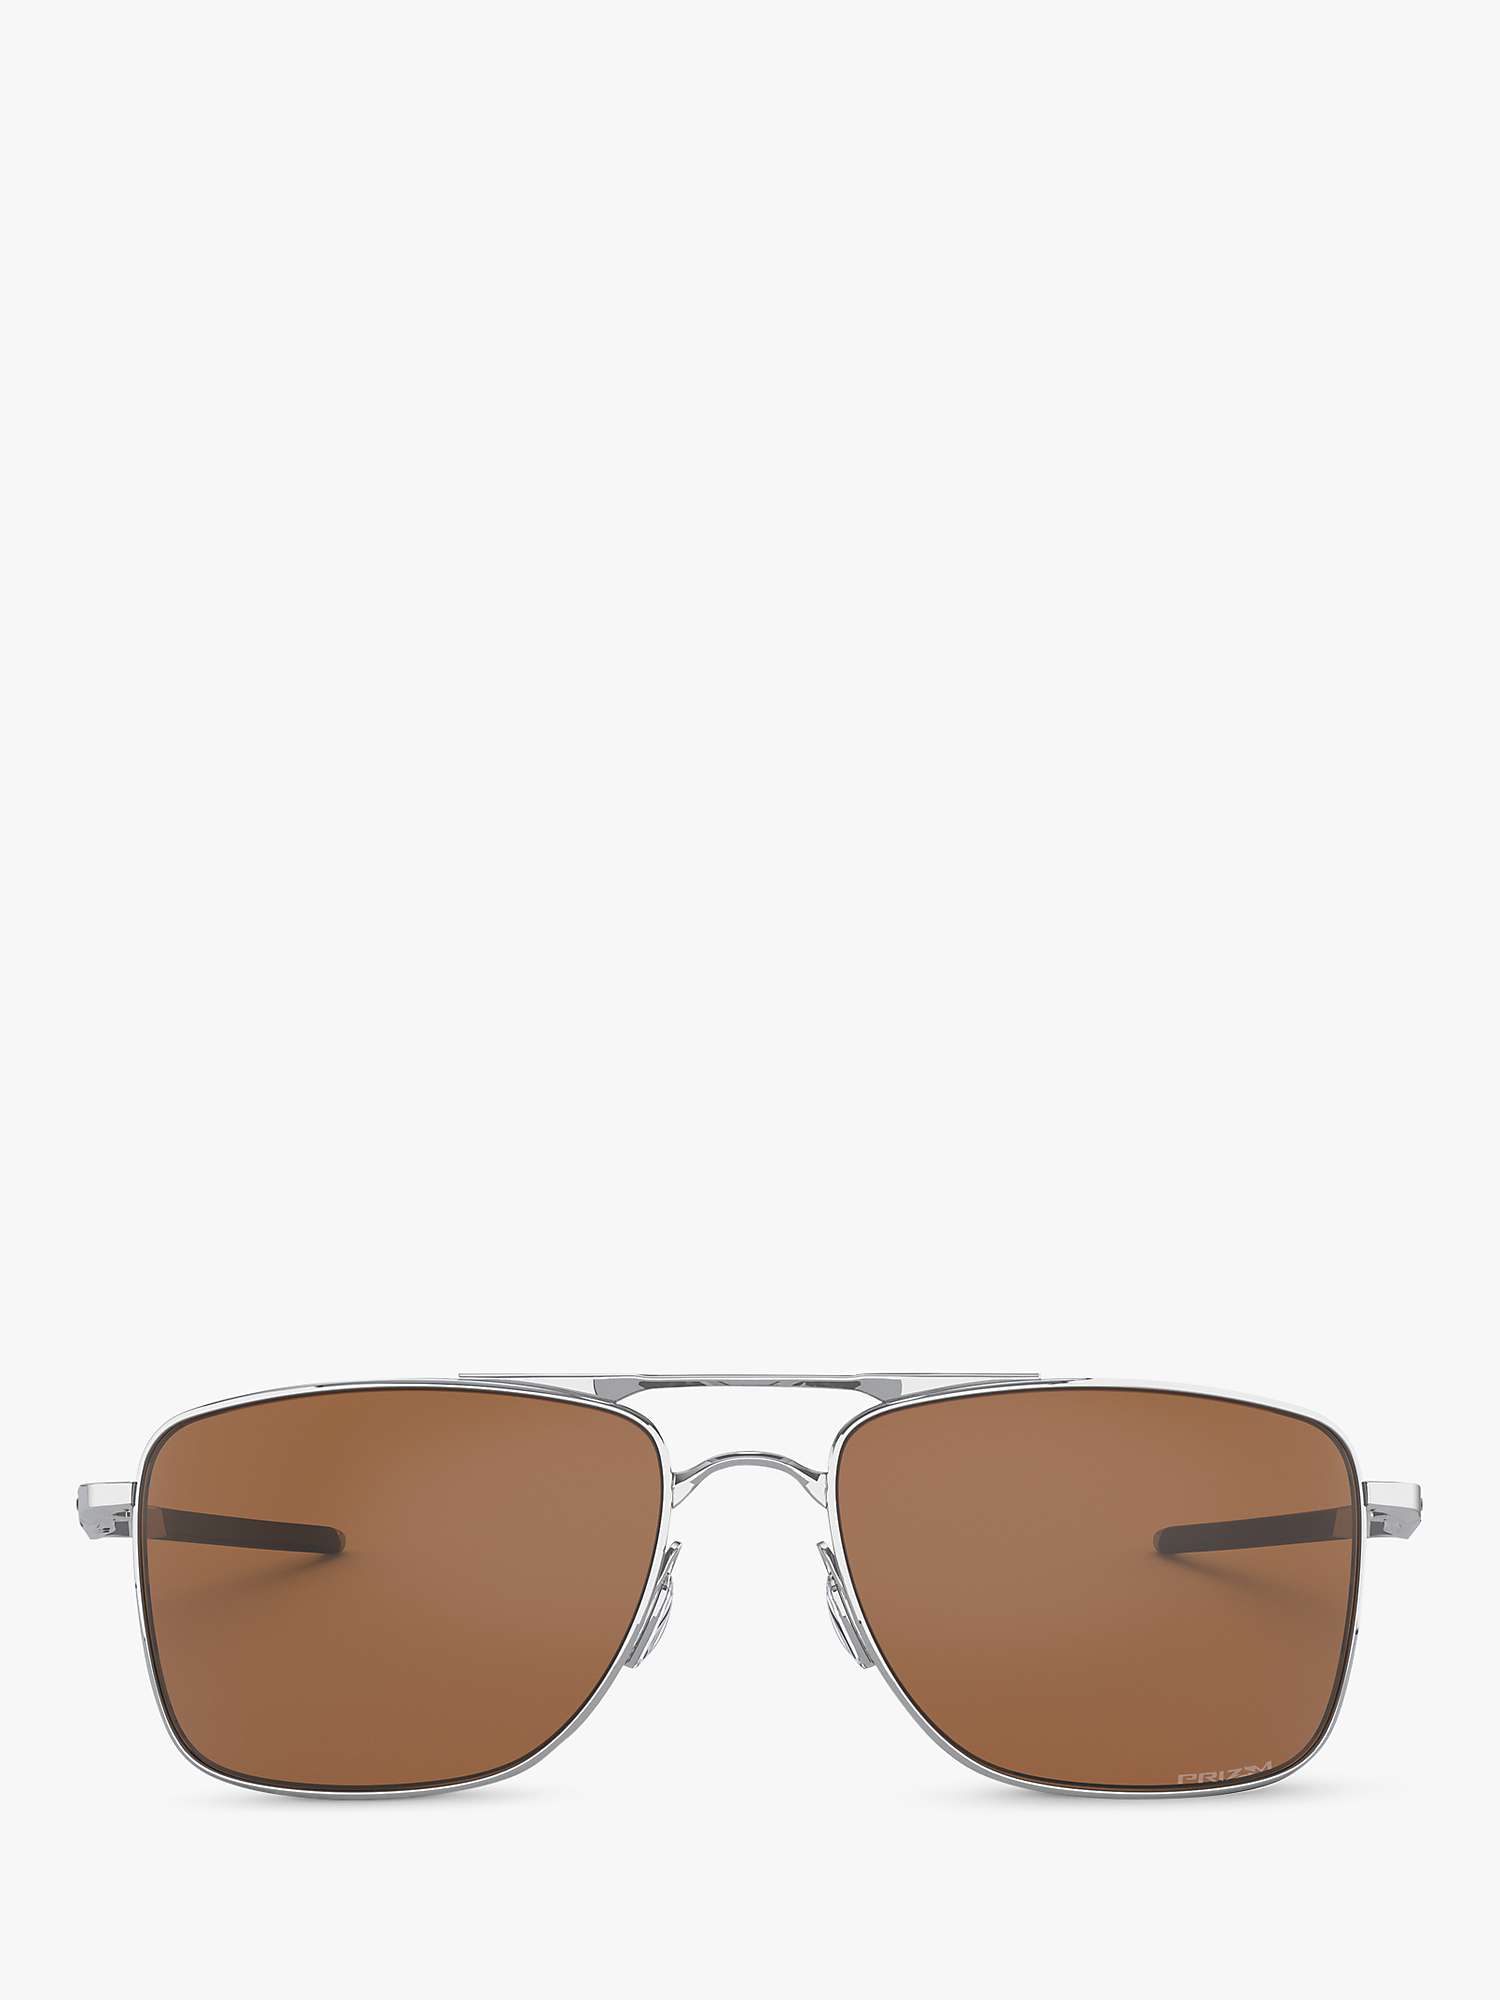 Buy Oakley OO4124 Men's Rectangular Sunglasses, Brown/Silver Online at johnlewis.com